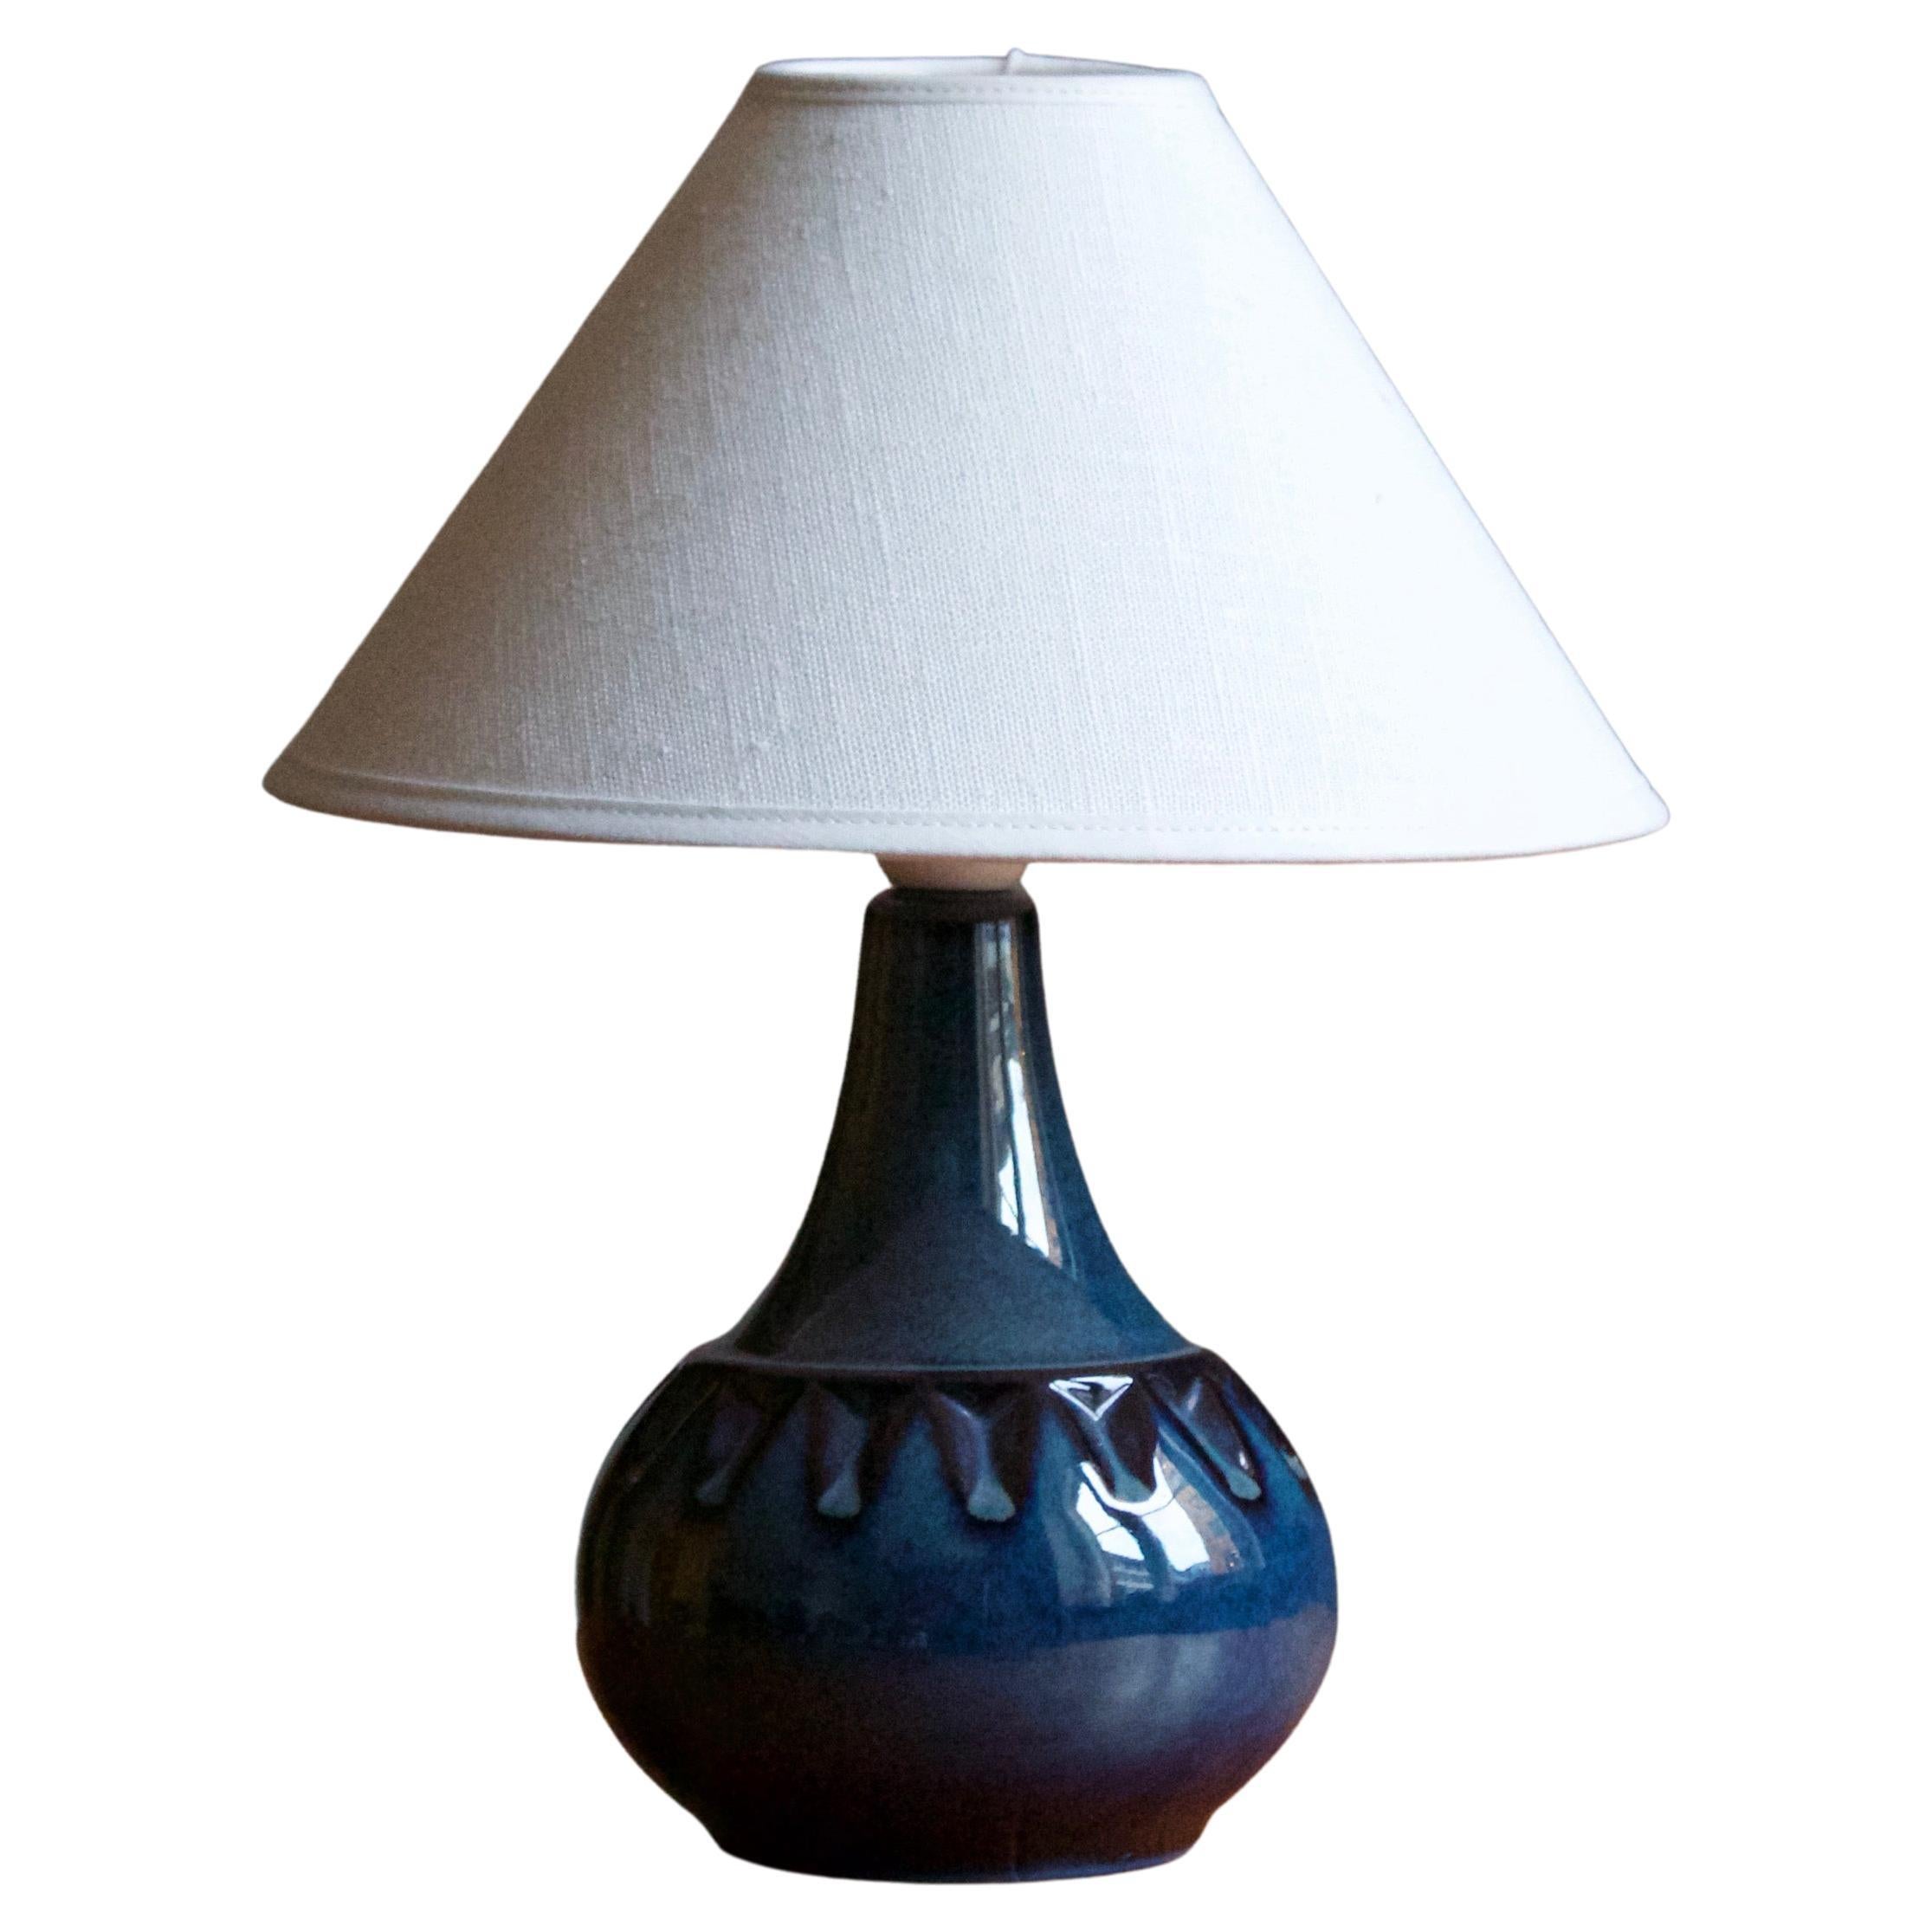 Søholm Stentøj, Table Lamp, Blue Glazed Stoneware, Bornholm, Denmark, 1960s